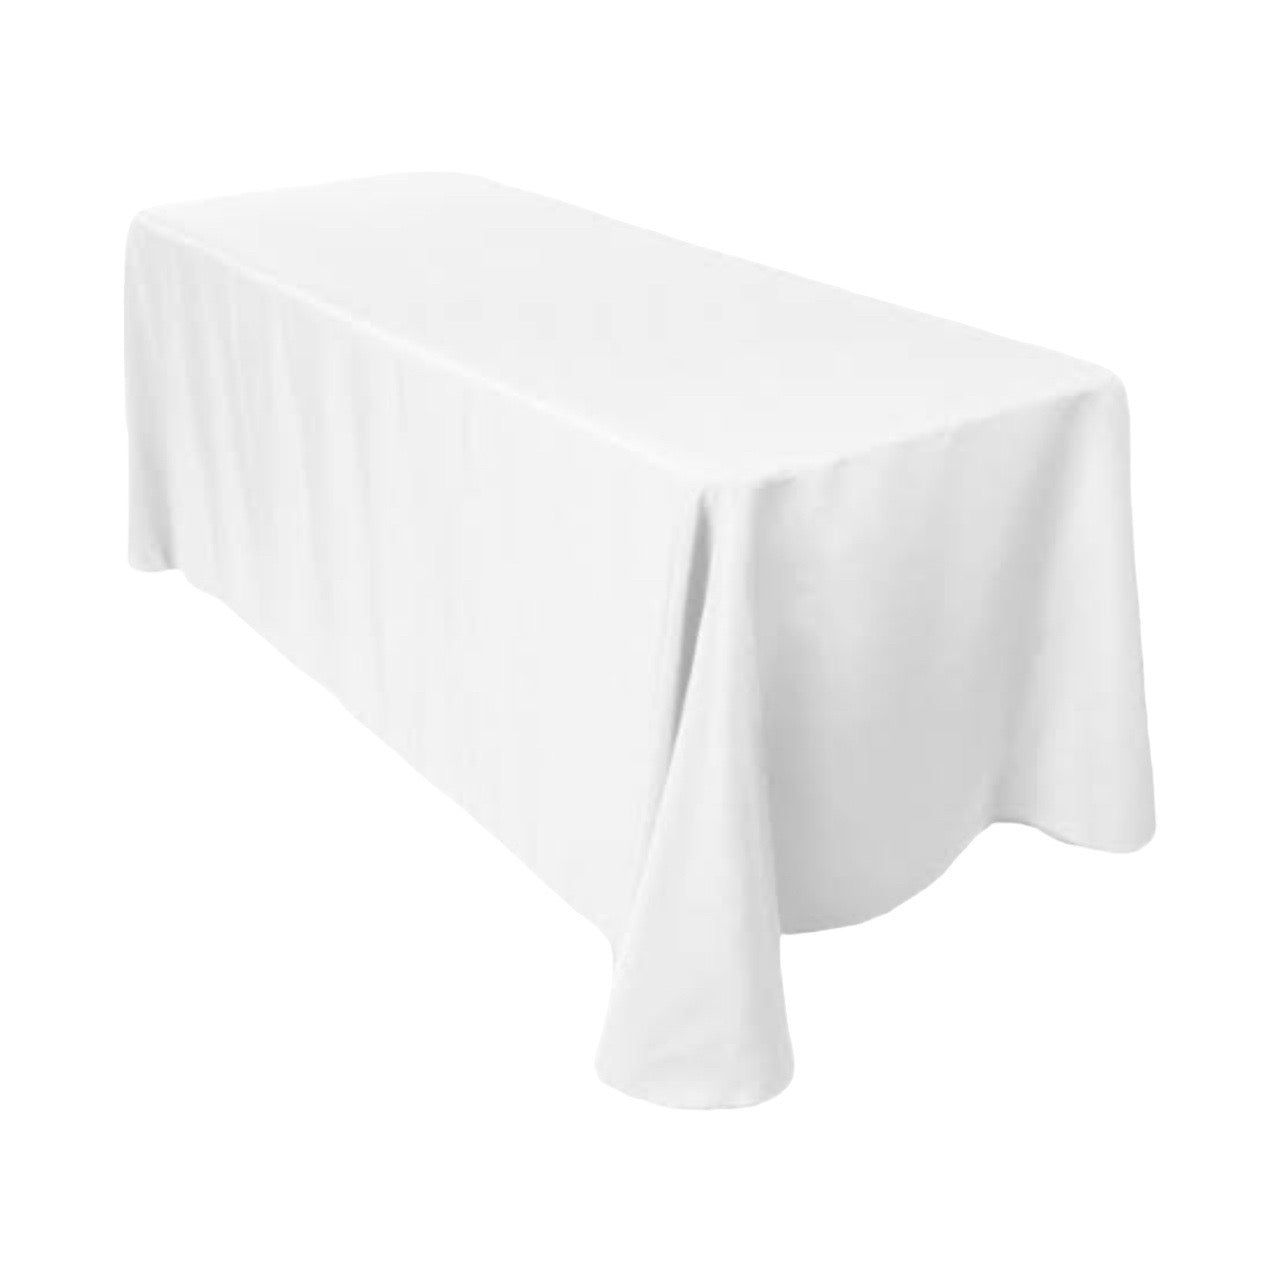 Table Cloth Rockhampton Vintage Hire